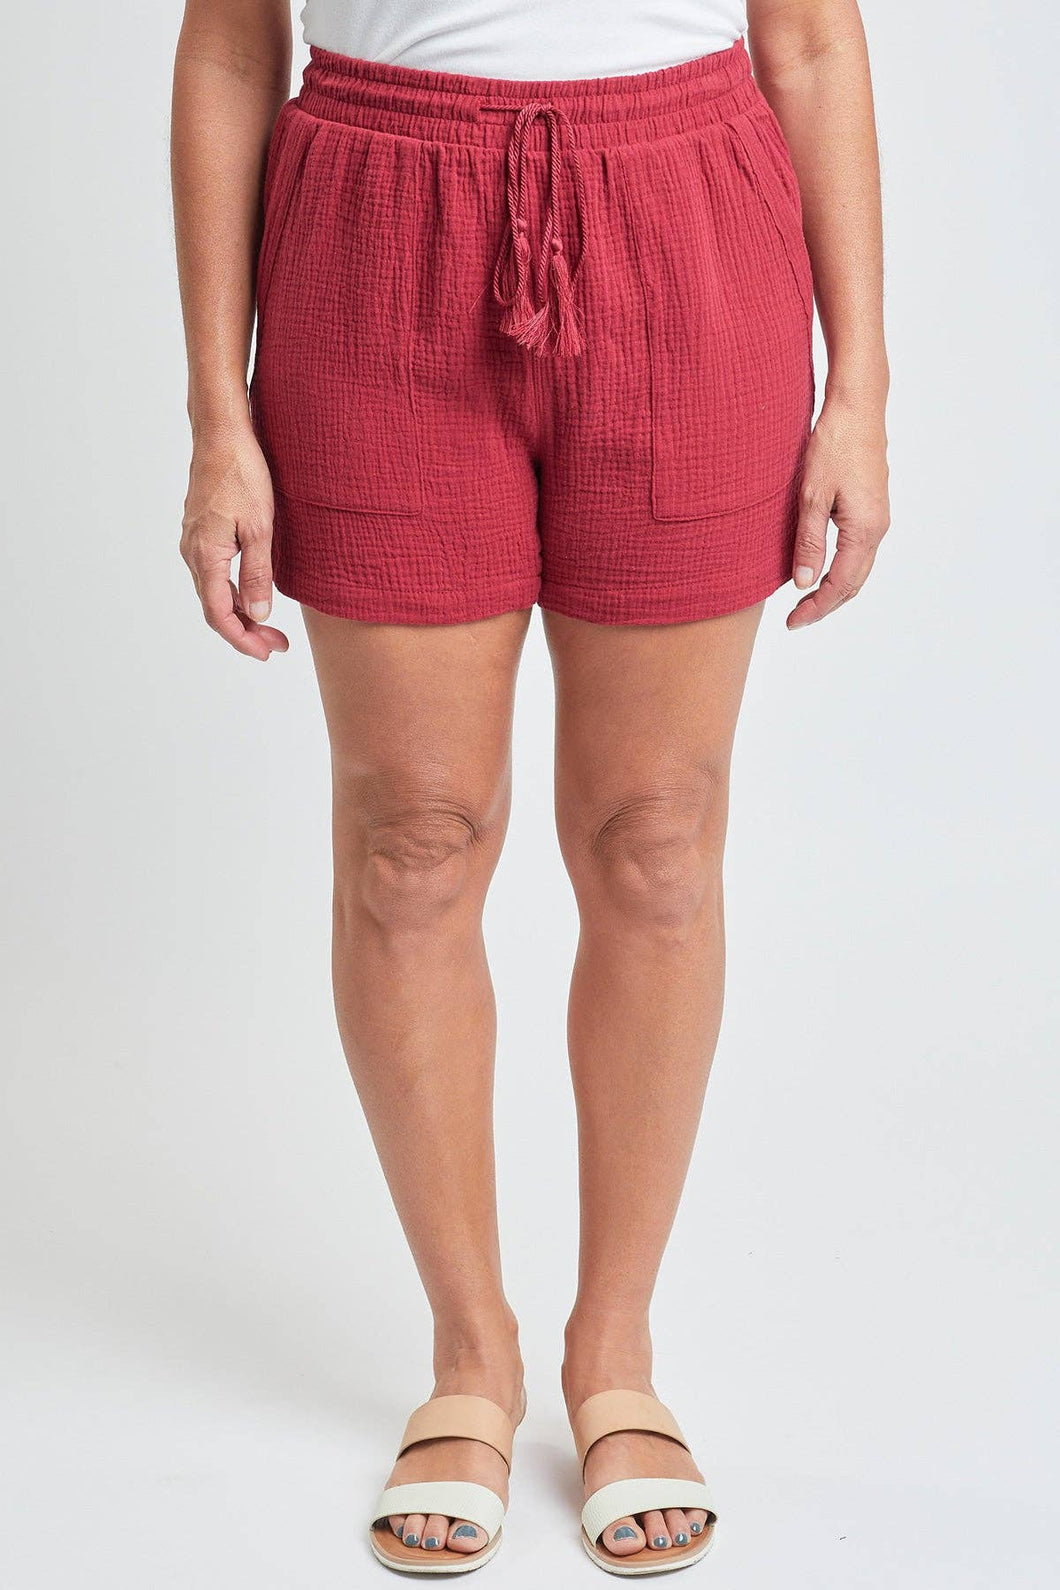 Double Gauze Shorts With Porkchop Pockets: MEDIUM / GARNET